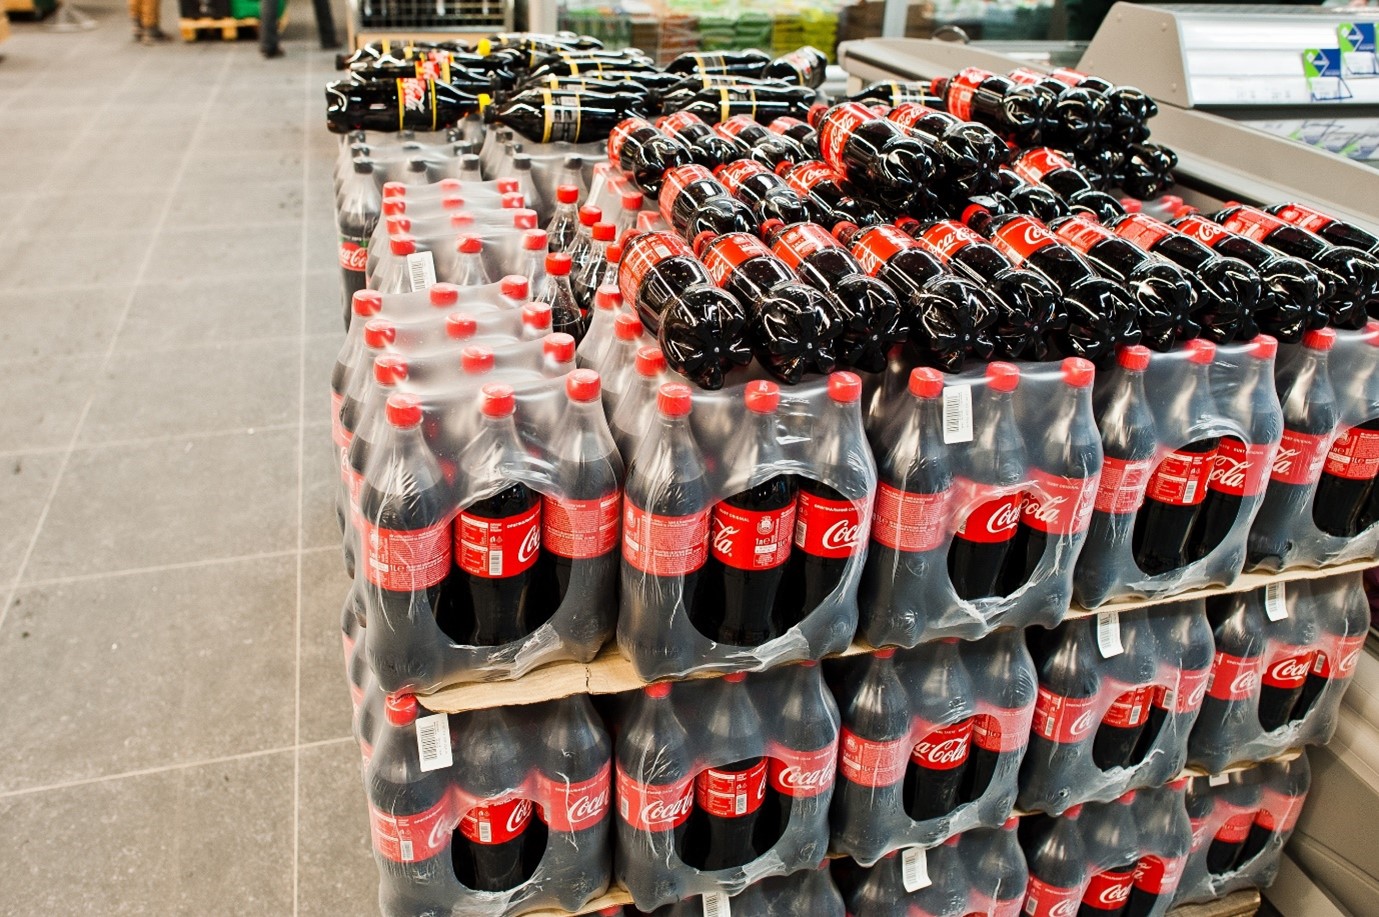 Coca-Cola bottles in a shop.